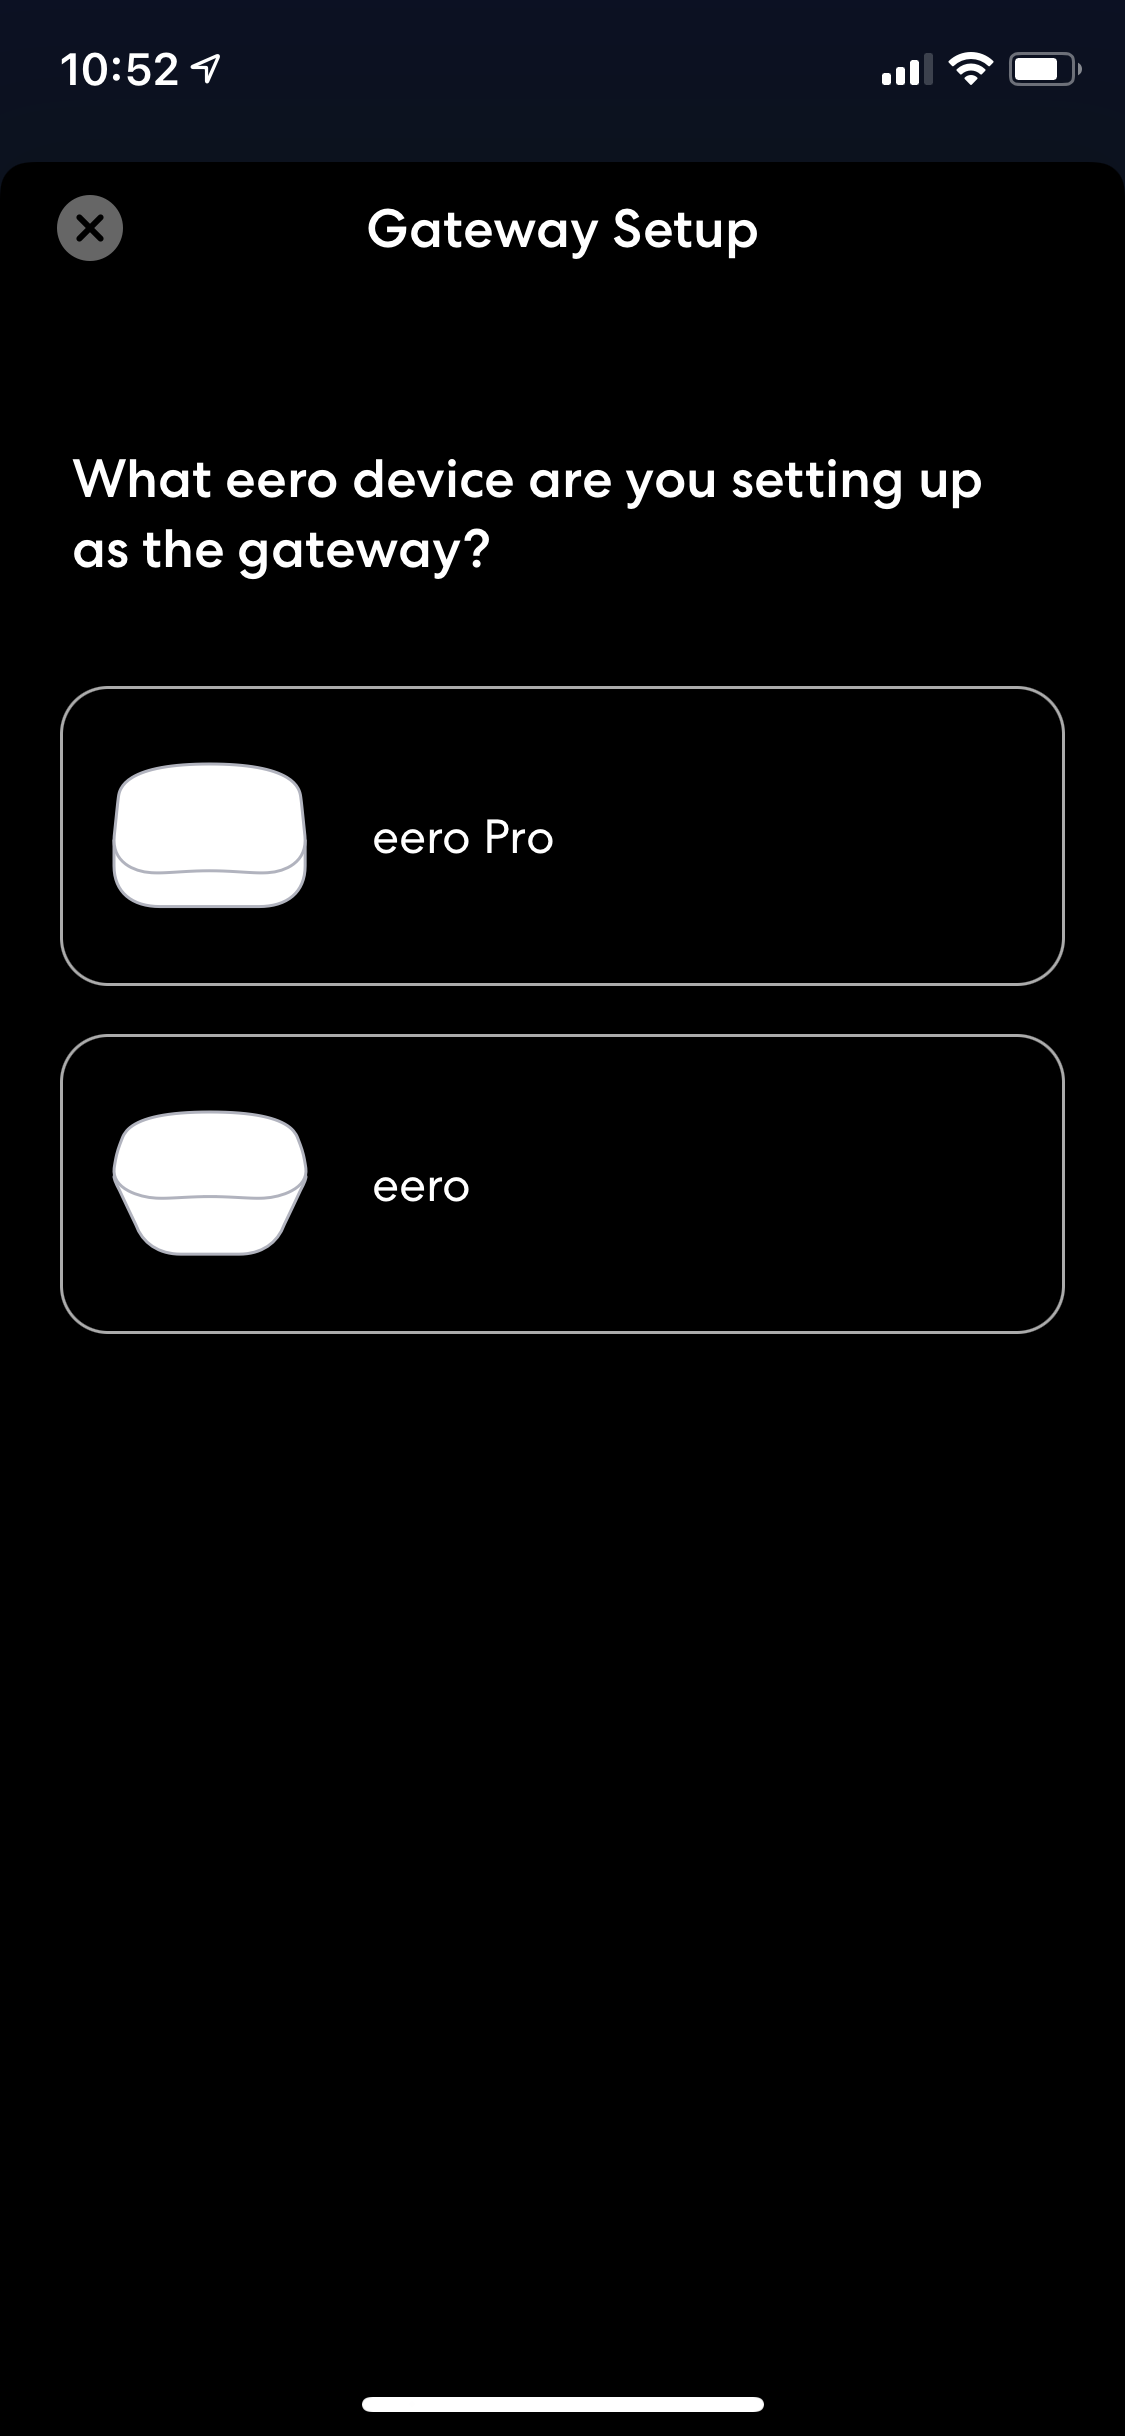 Pick Eero or Eero Pro. We're using the Eero in this guide